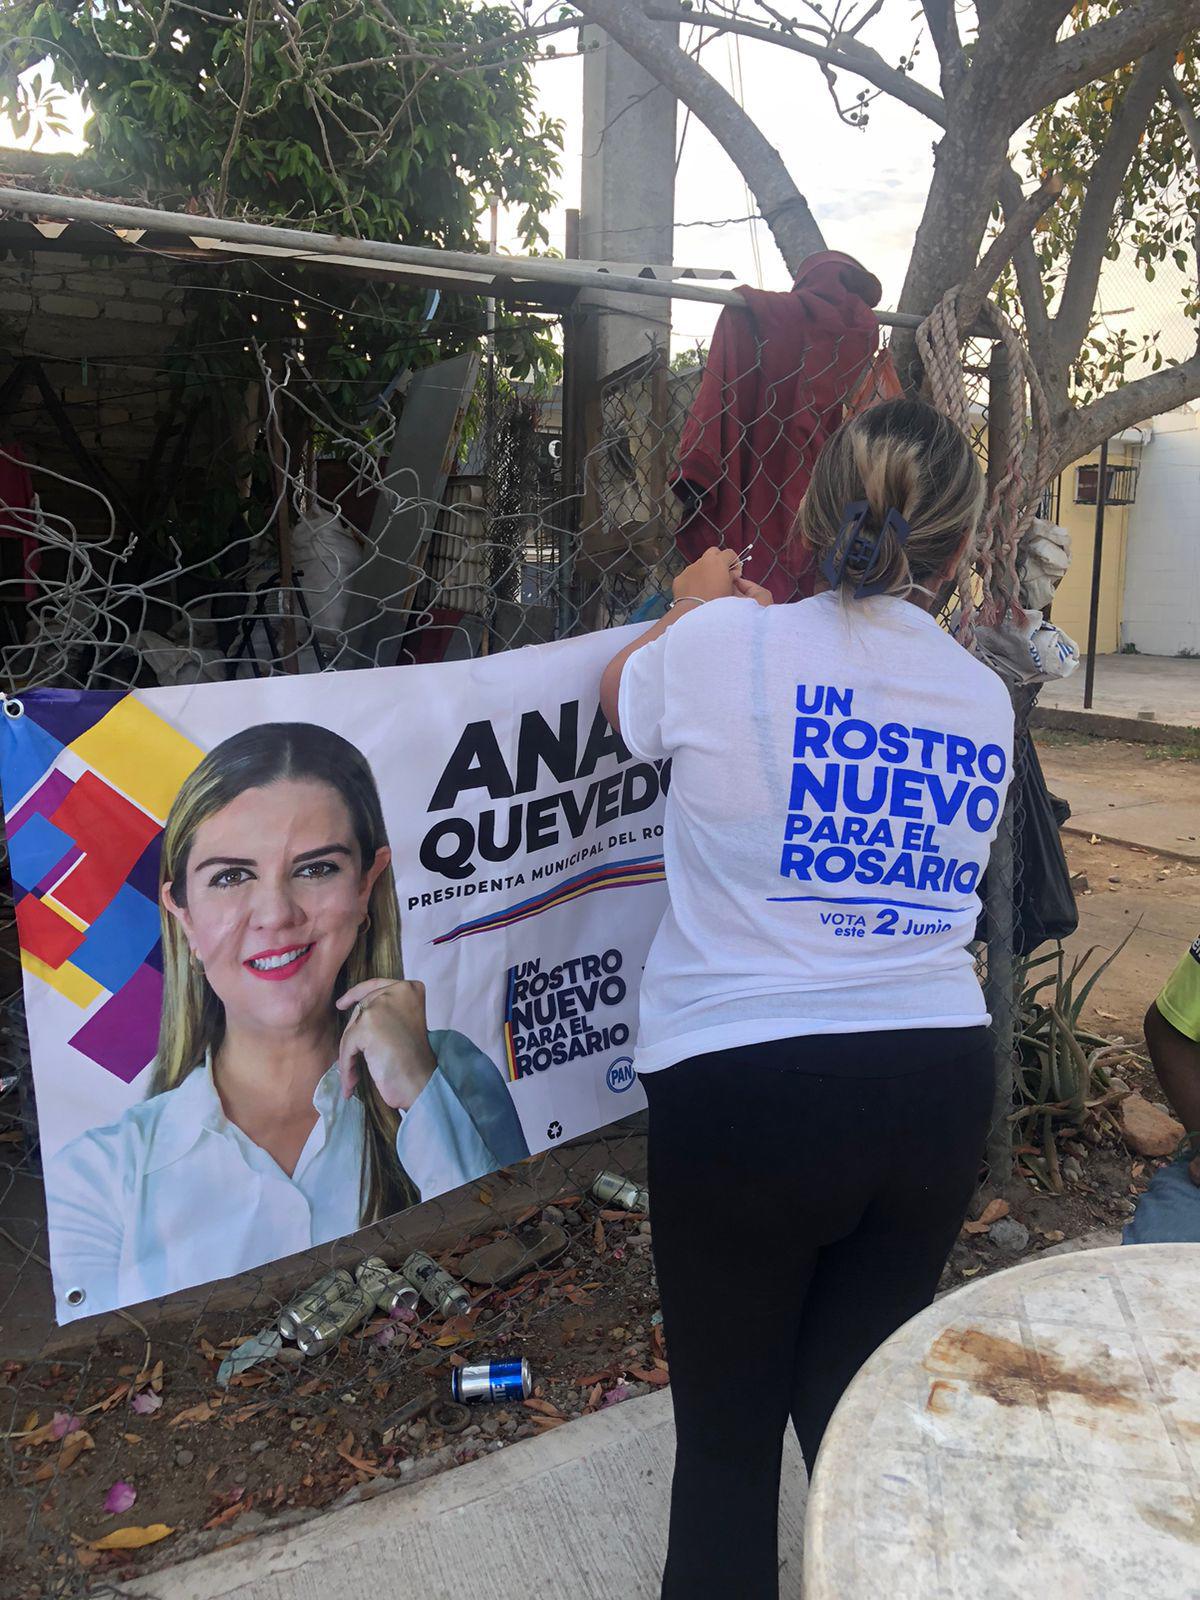 $!Candidata Ana Quevedo denuncia que oposición le retiró propaganda en Rosario